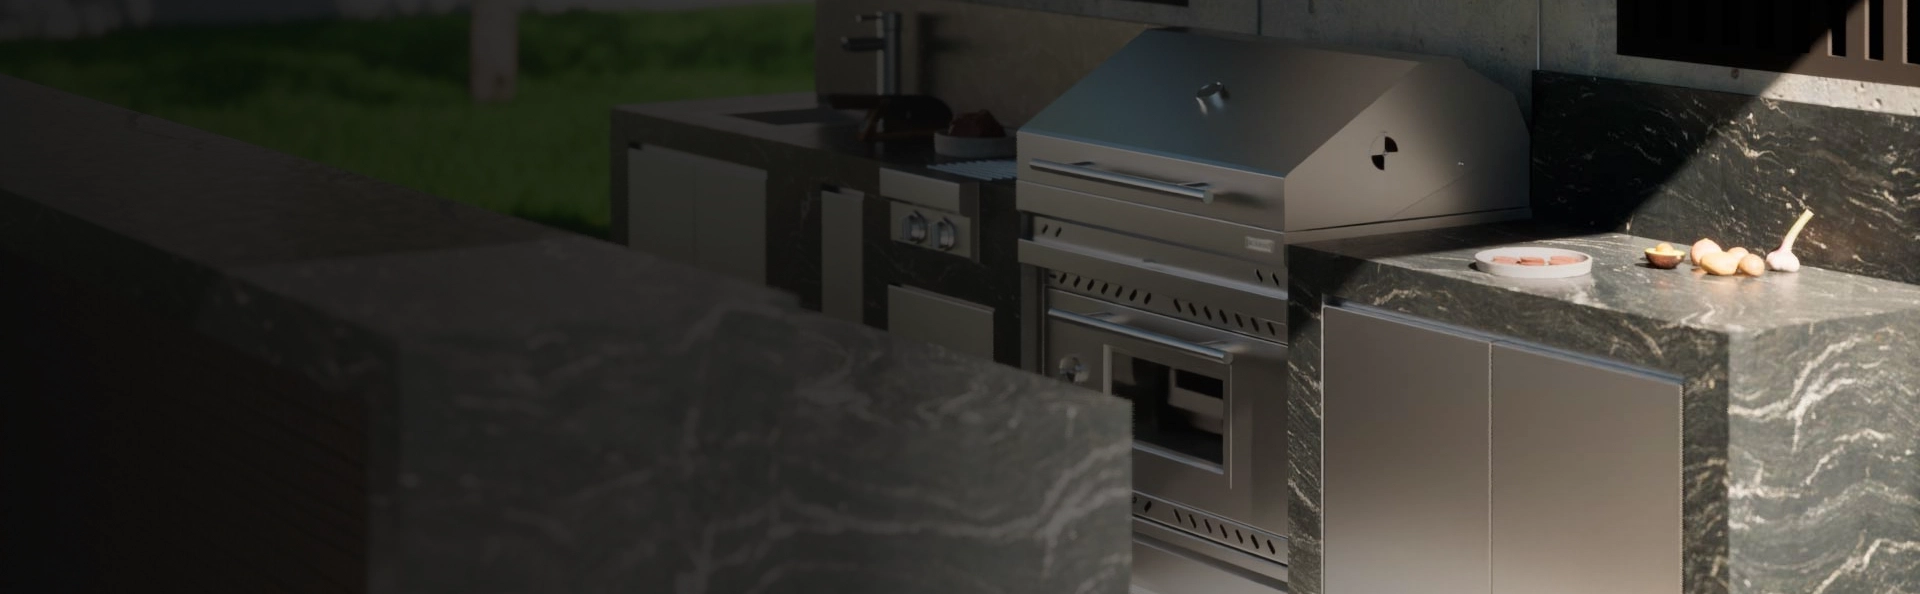 Cocina exterior con asador de acero inoxidable Grill Box